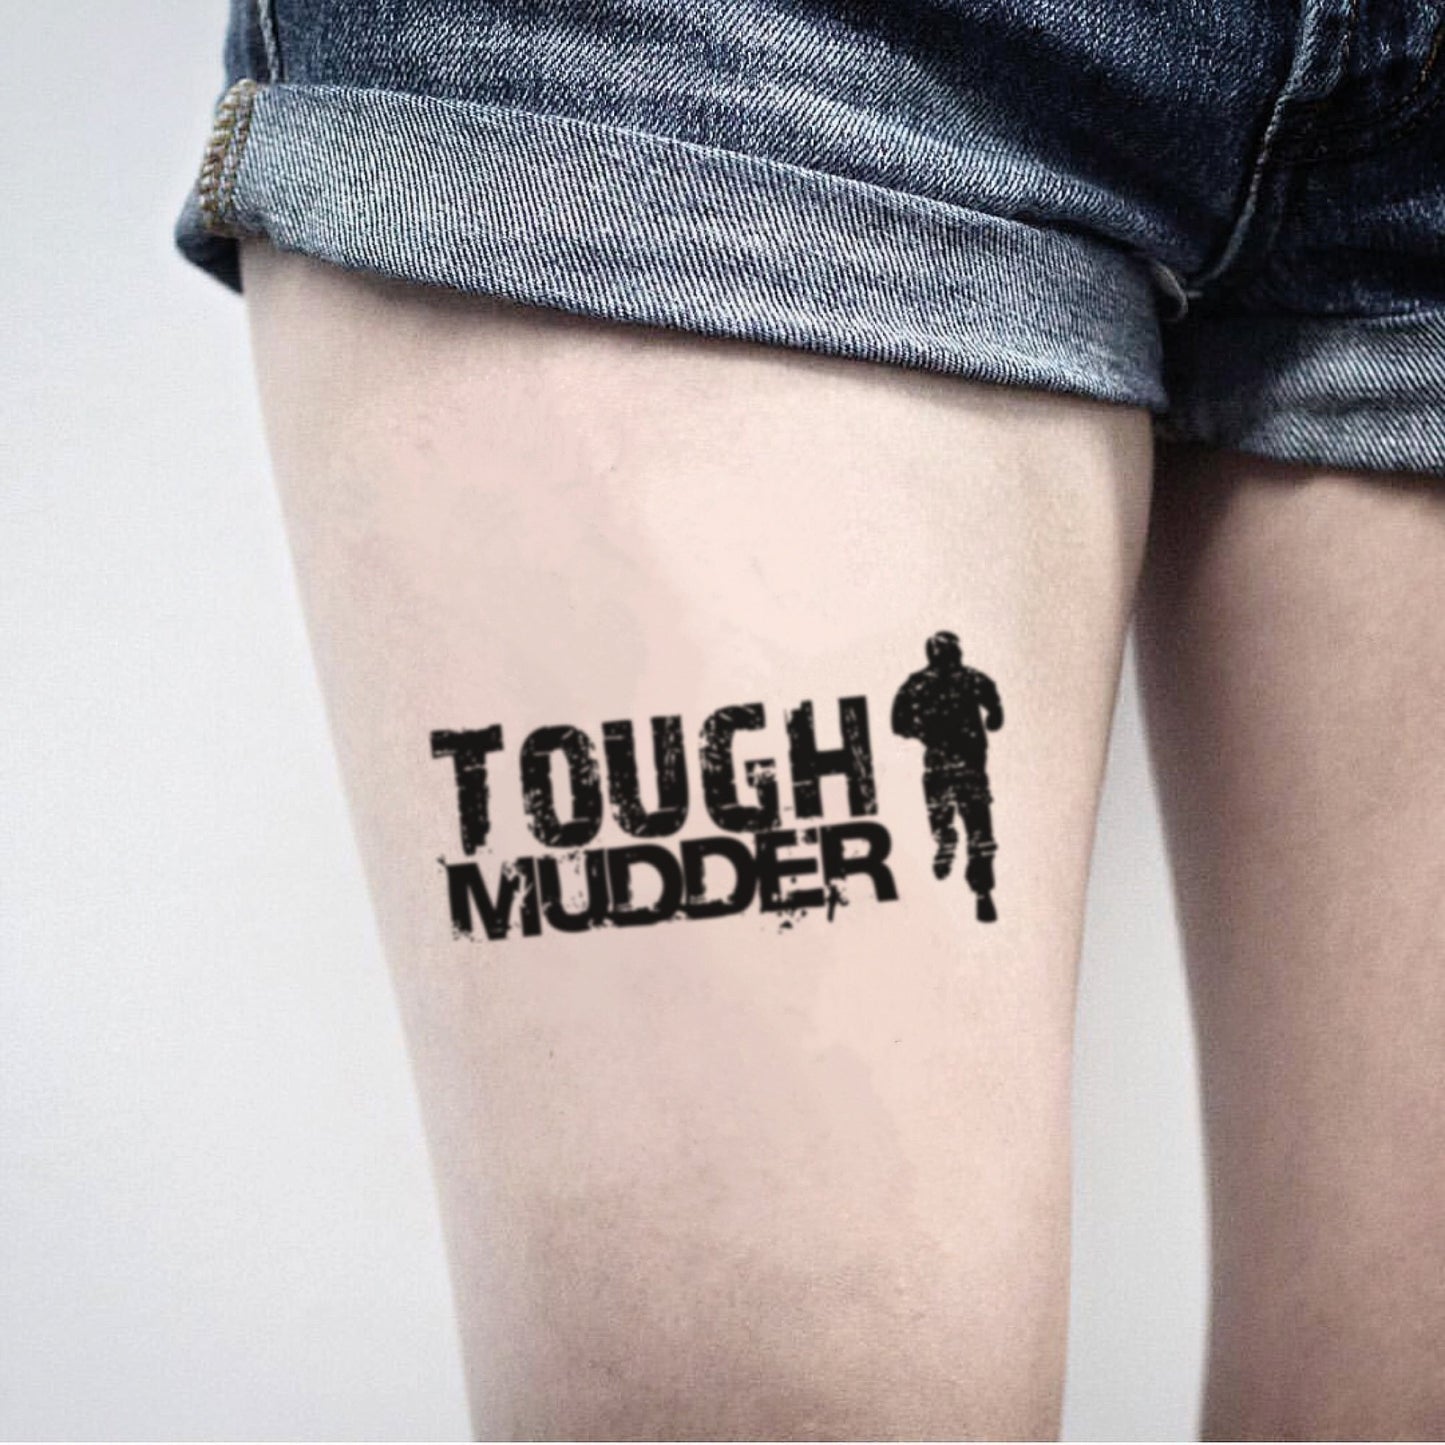 fake medium tough mudder upper leg lettering temporary tattoo sticker design idea on thigh